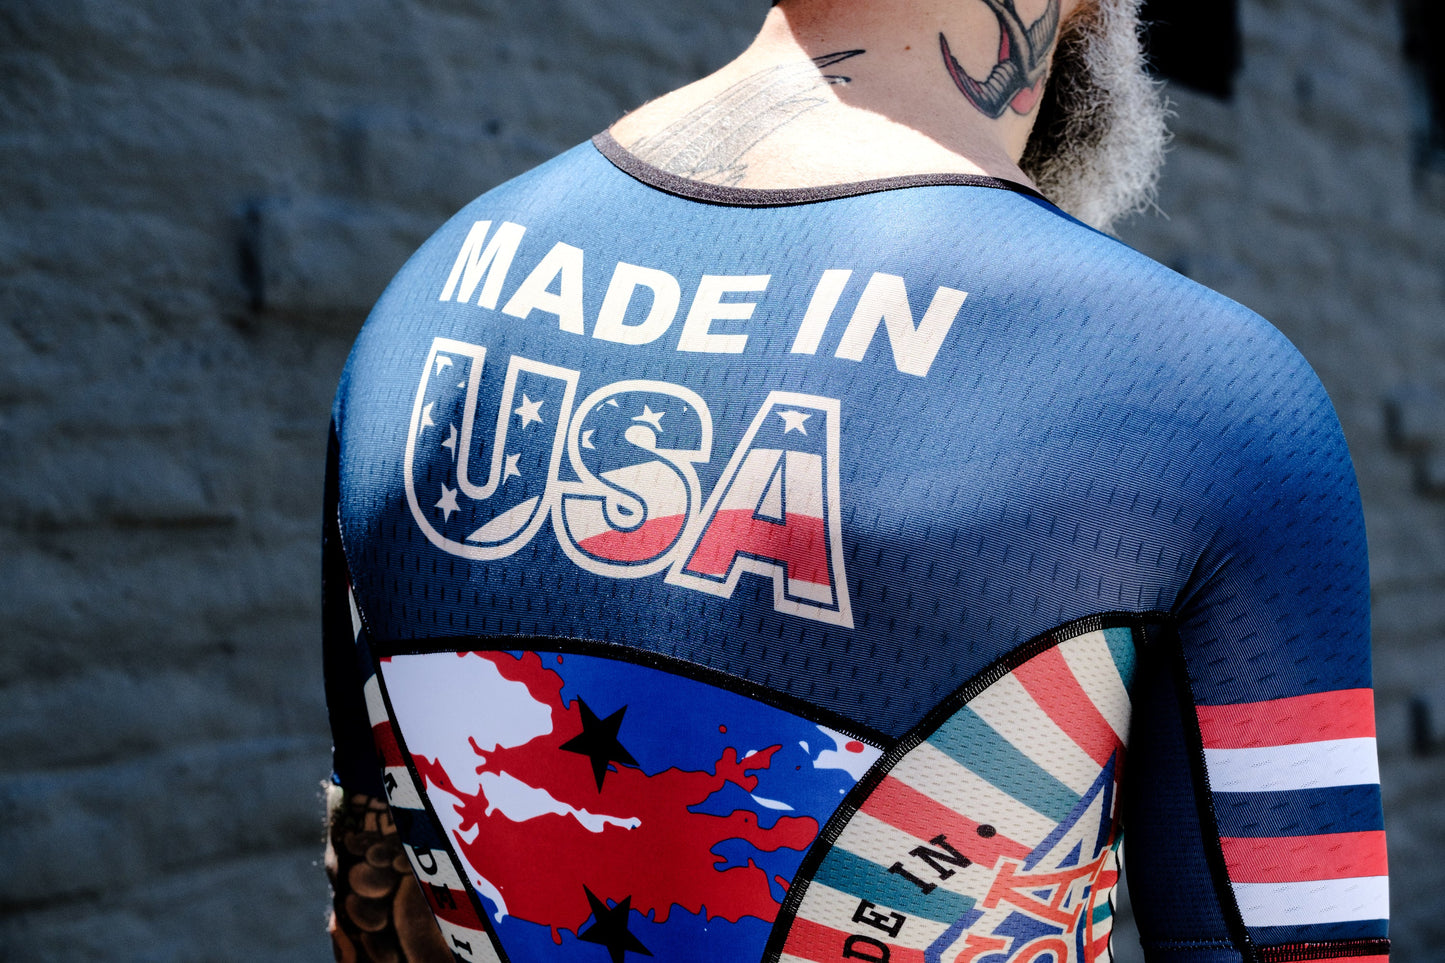 "USA Pride" FreeMotion 2.0 Aero Men's Suit